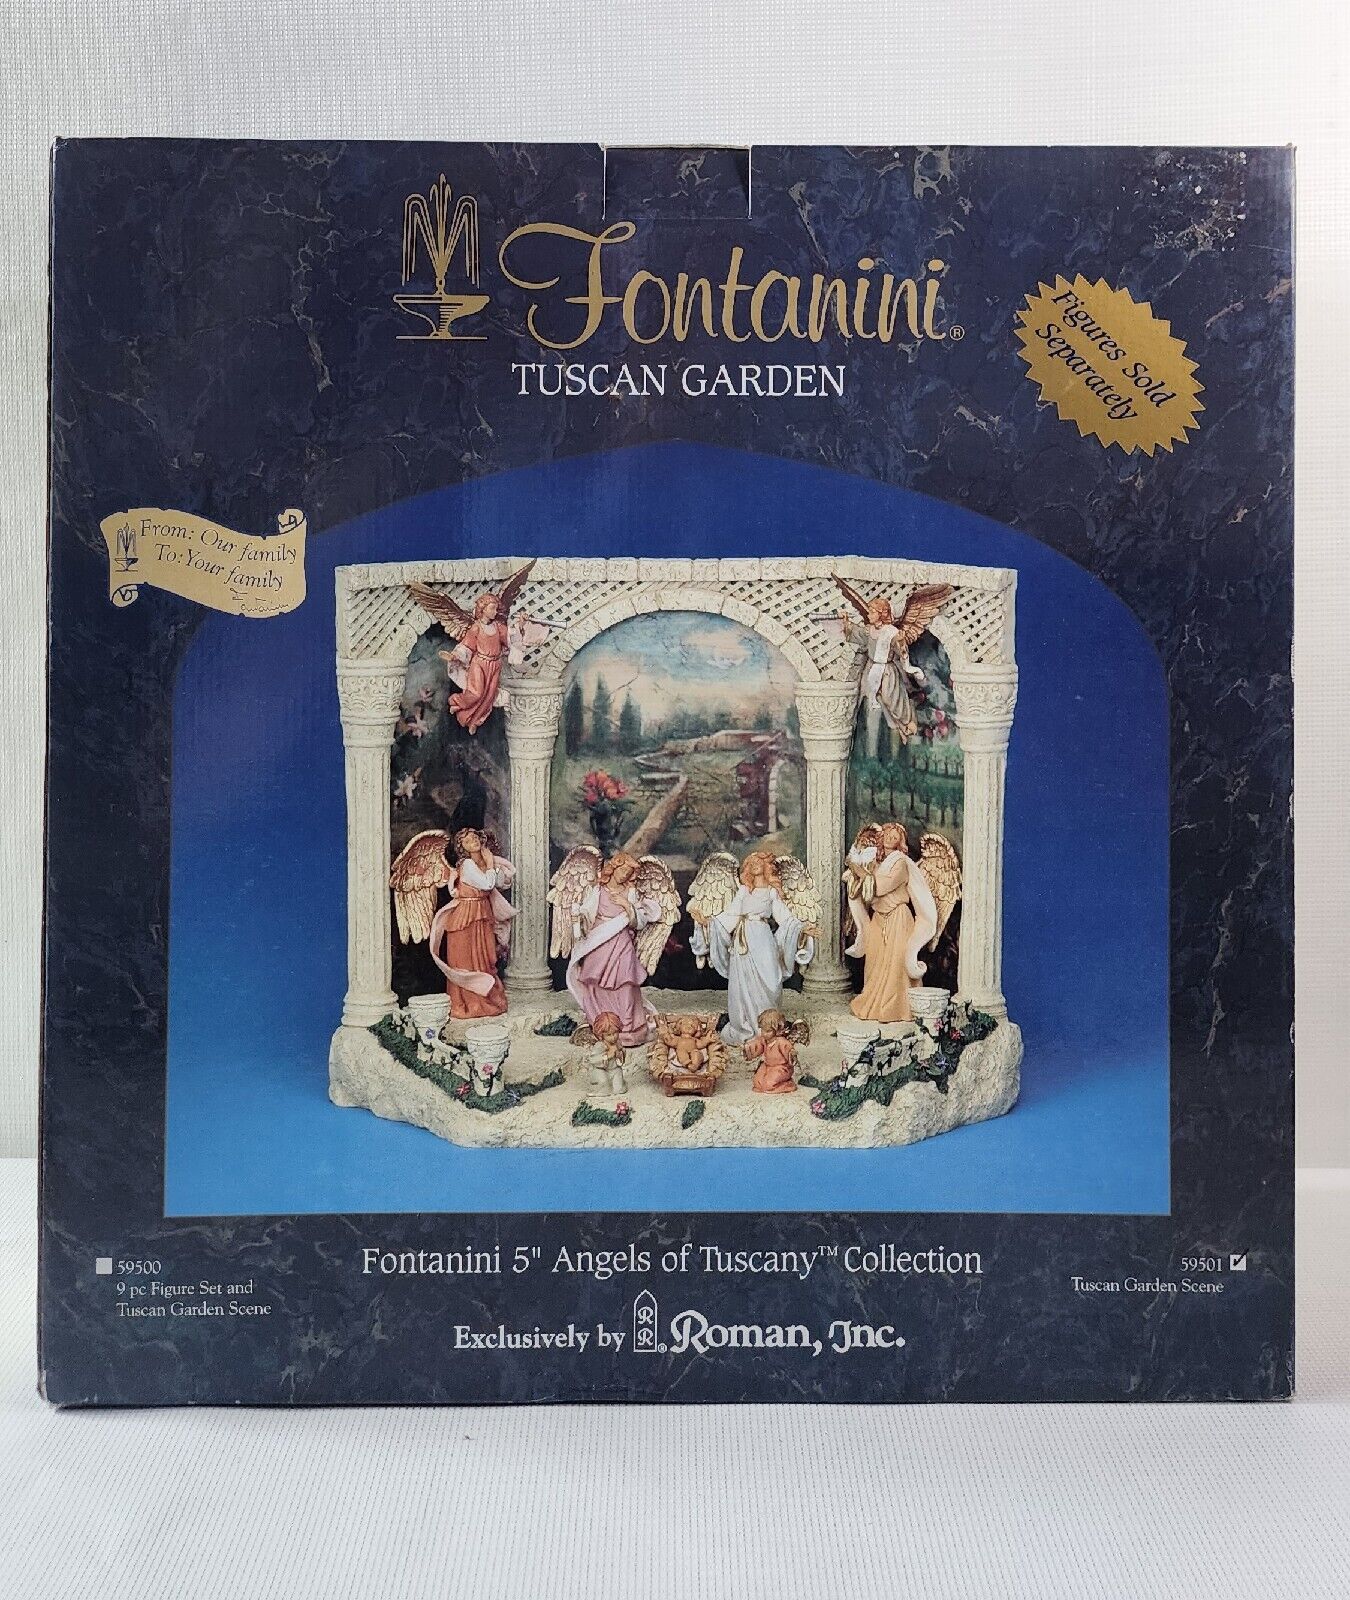 Fontanini Roman Tuscan Garden Landscape Nativity Scene Backdrop 59501 W/Box 2002